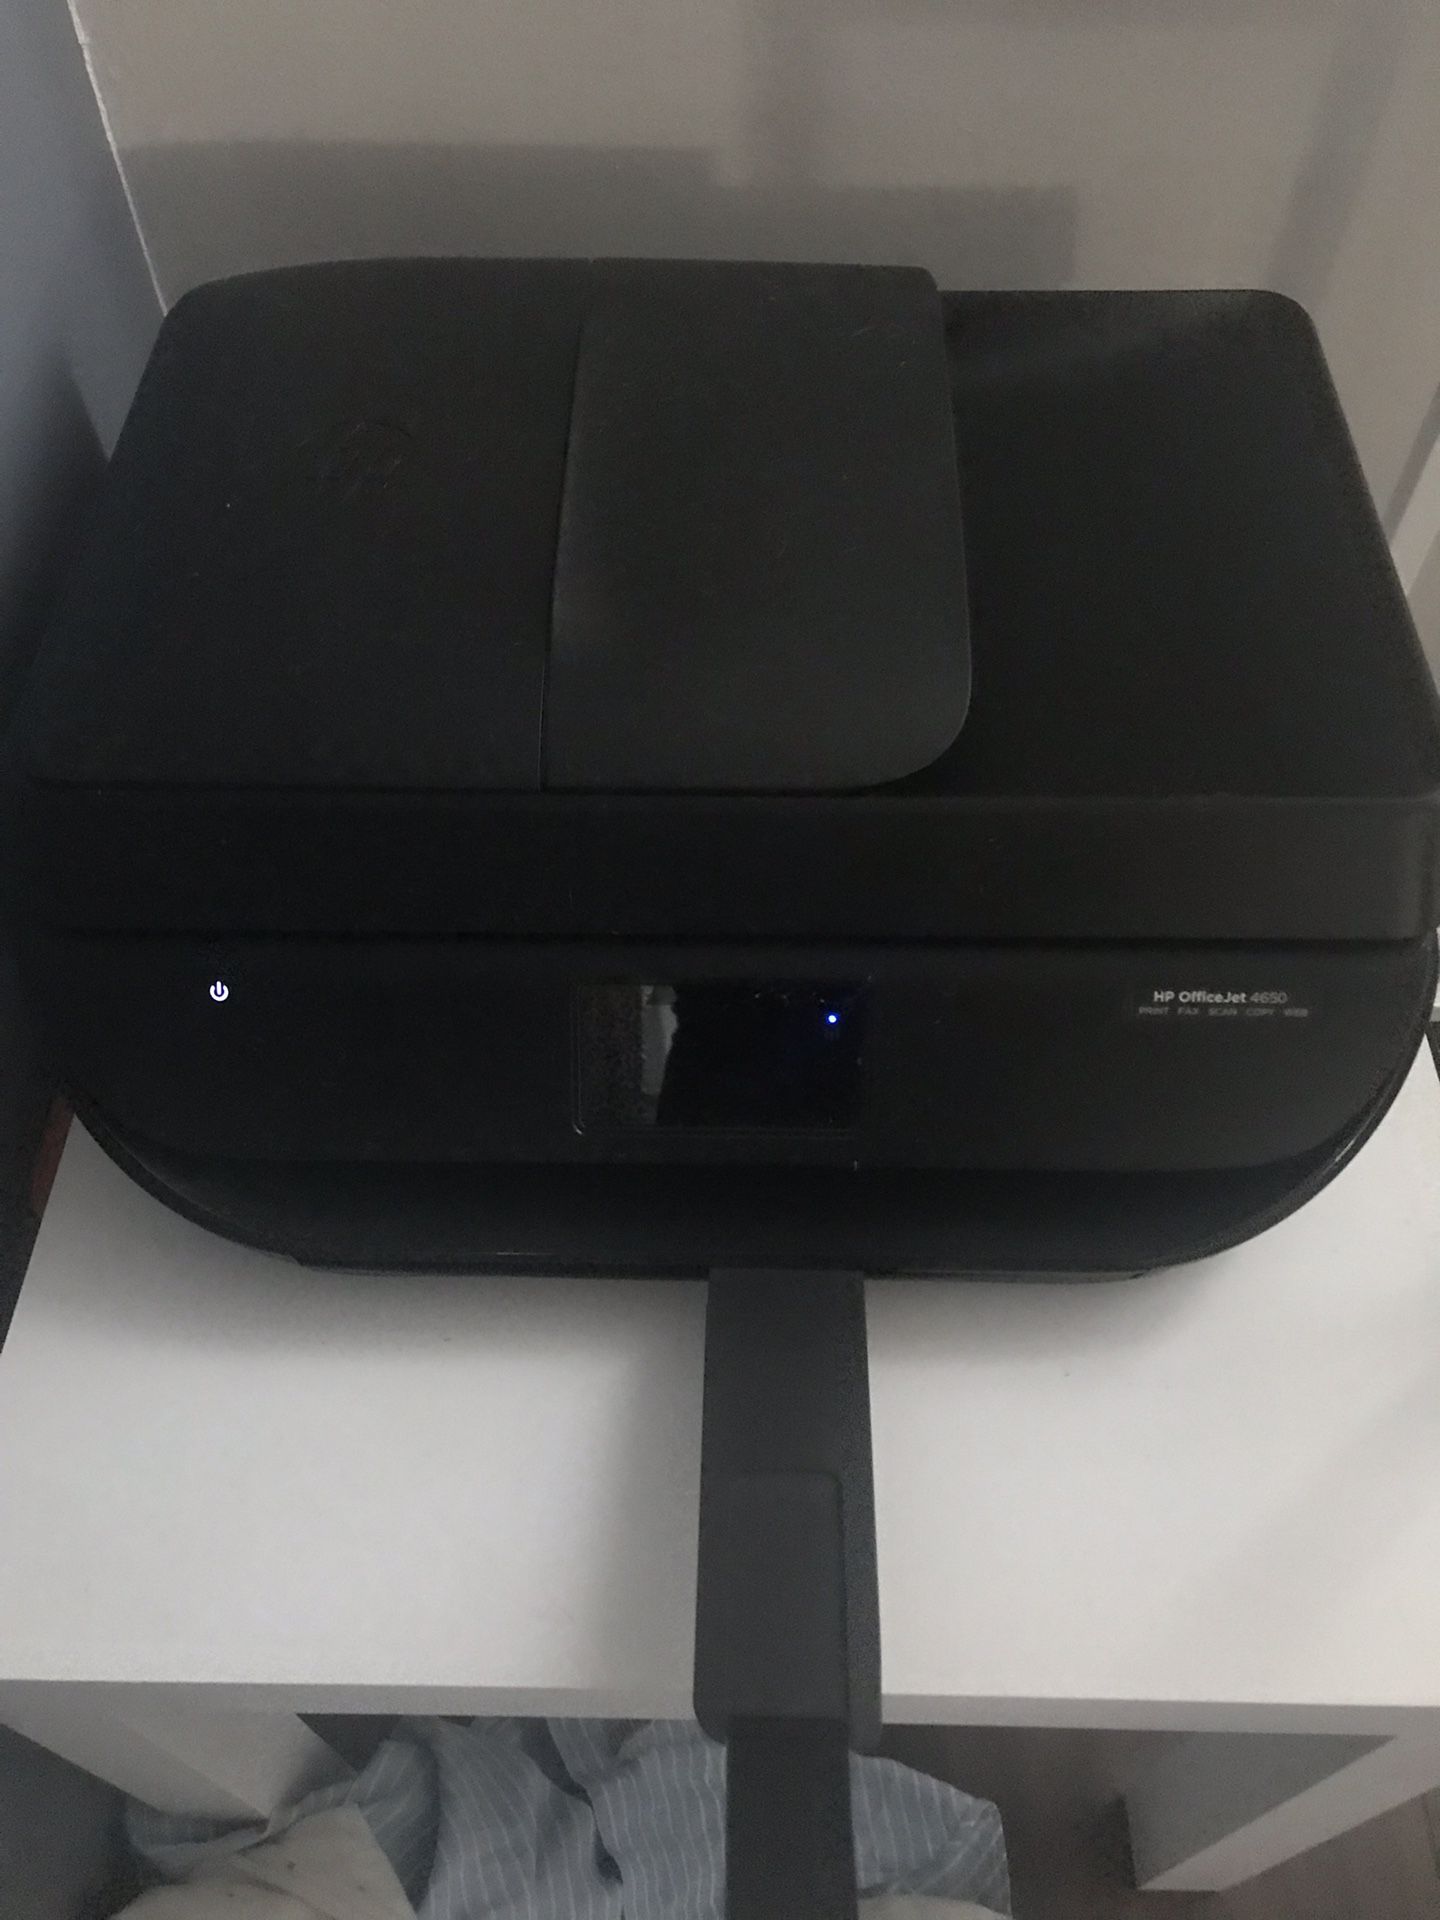 HP officejet printer - scan, copy, fax, printer